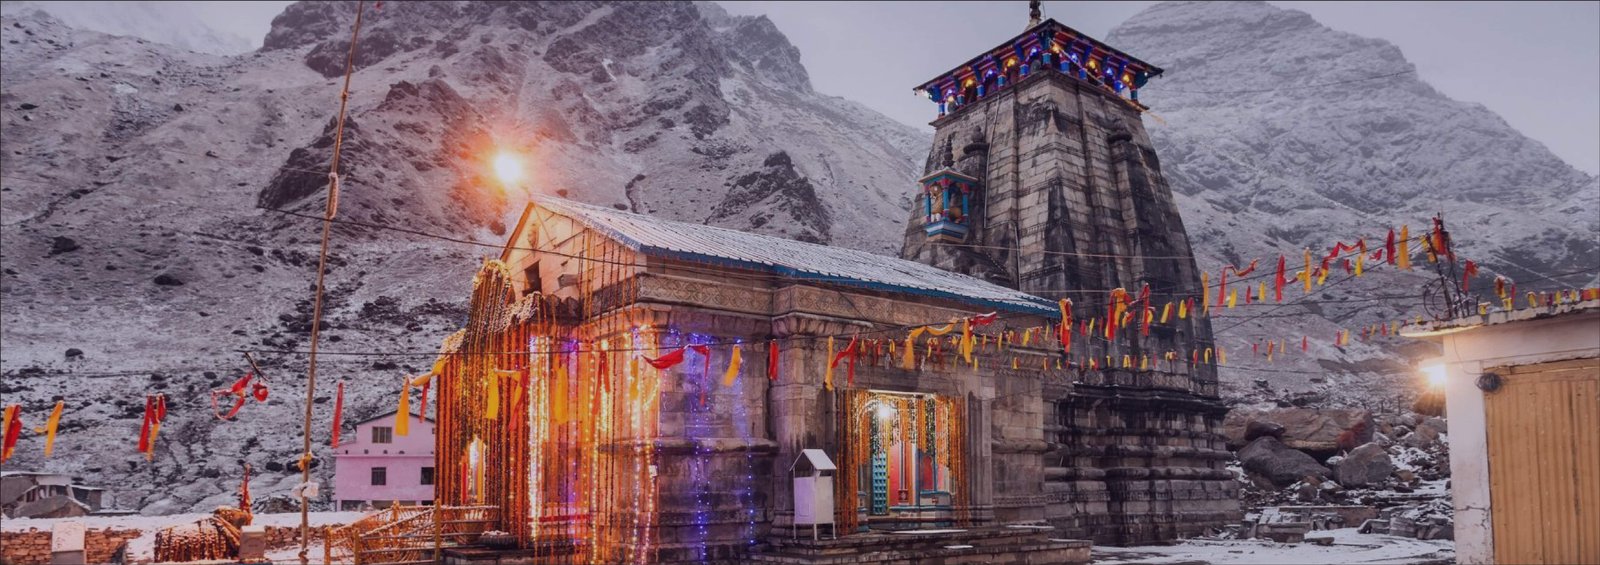 Gangotri Temple Spiritual Experience - Divine sanctuary with The Chardham